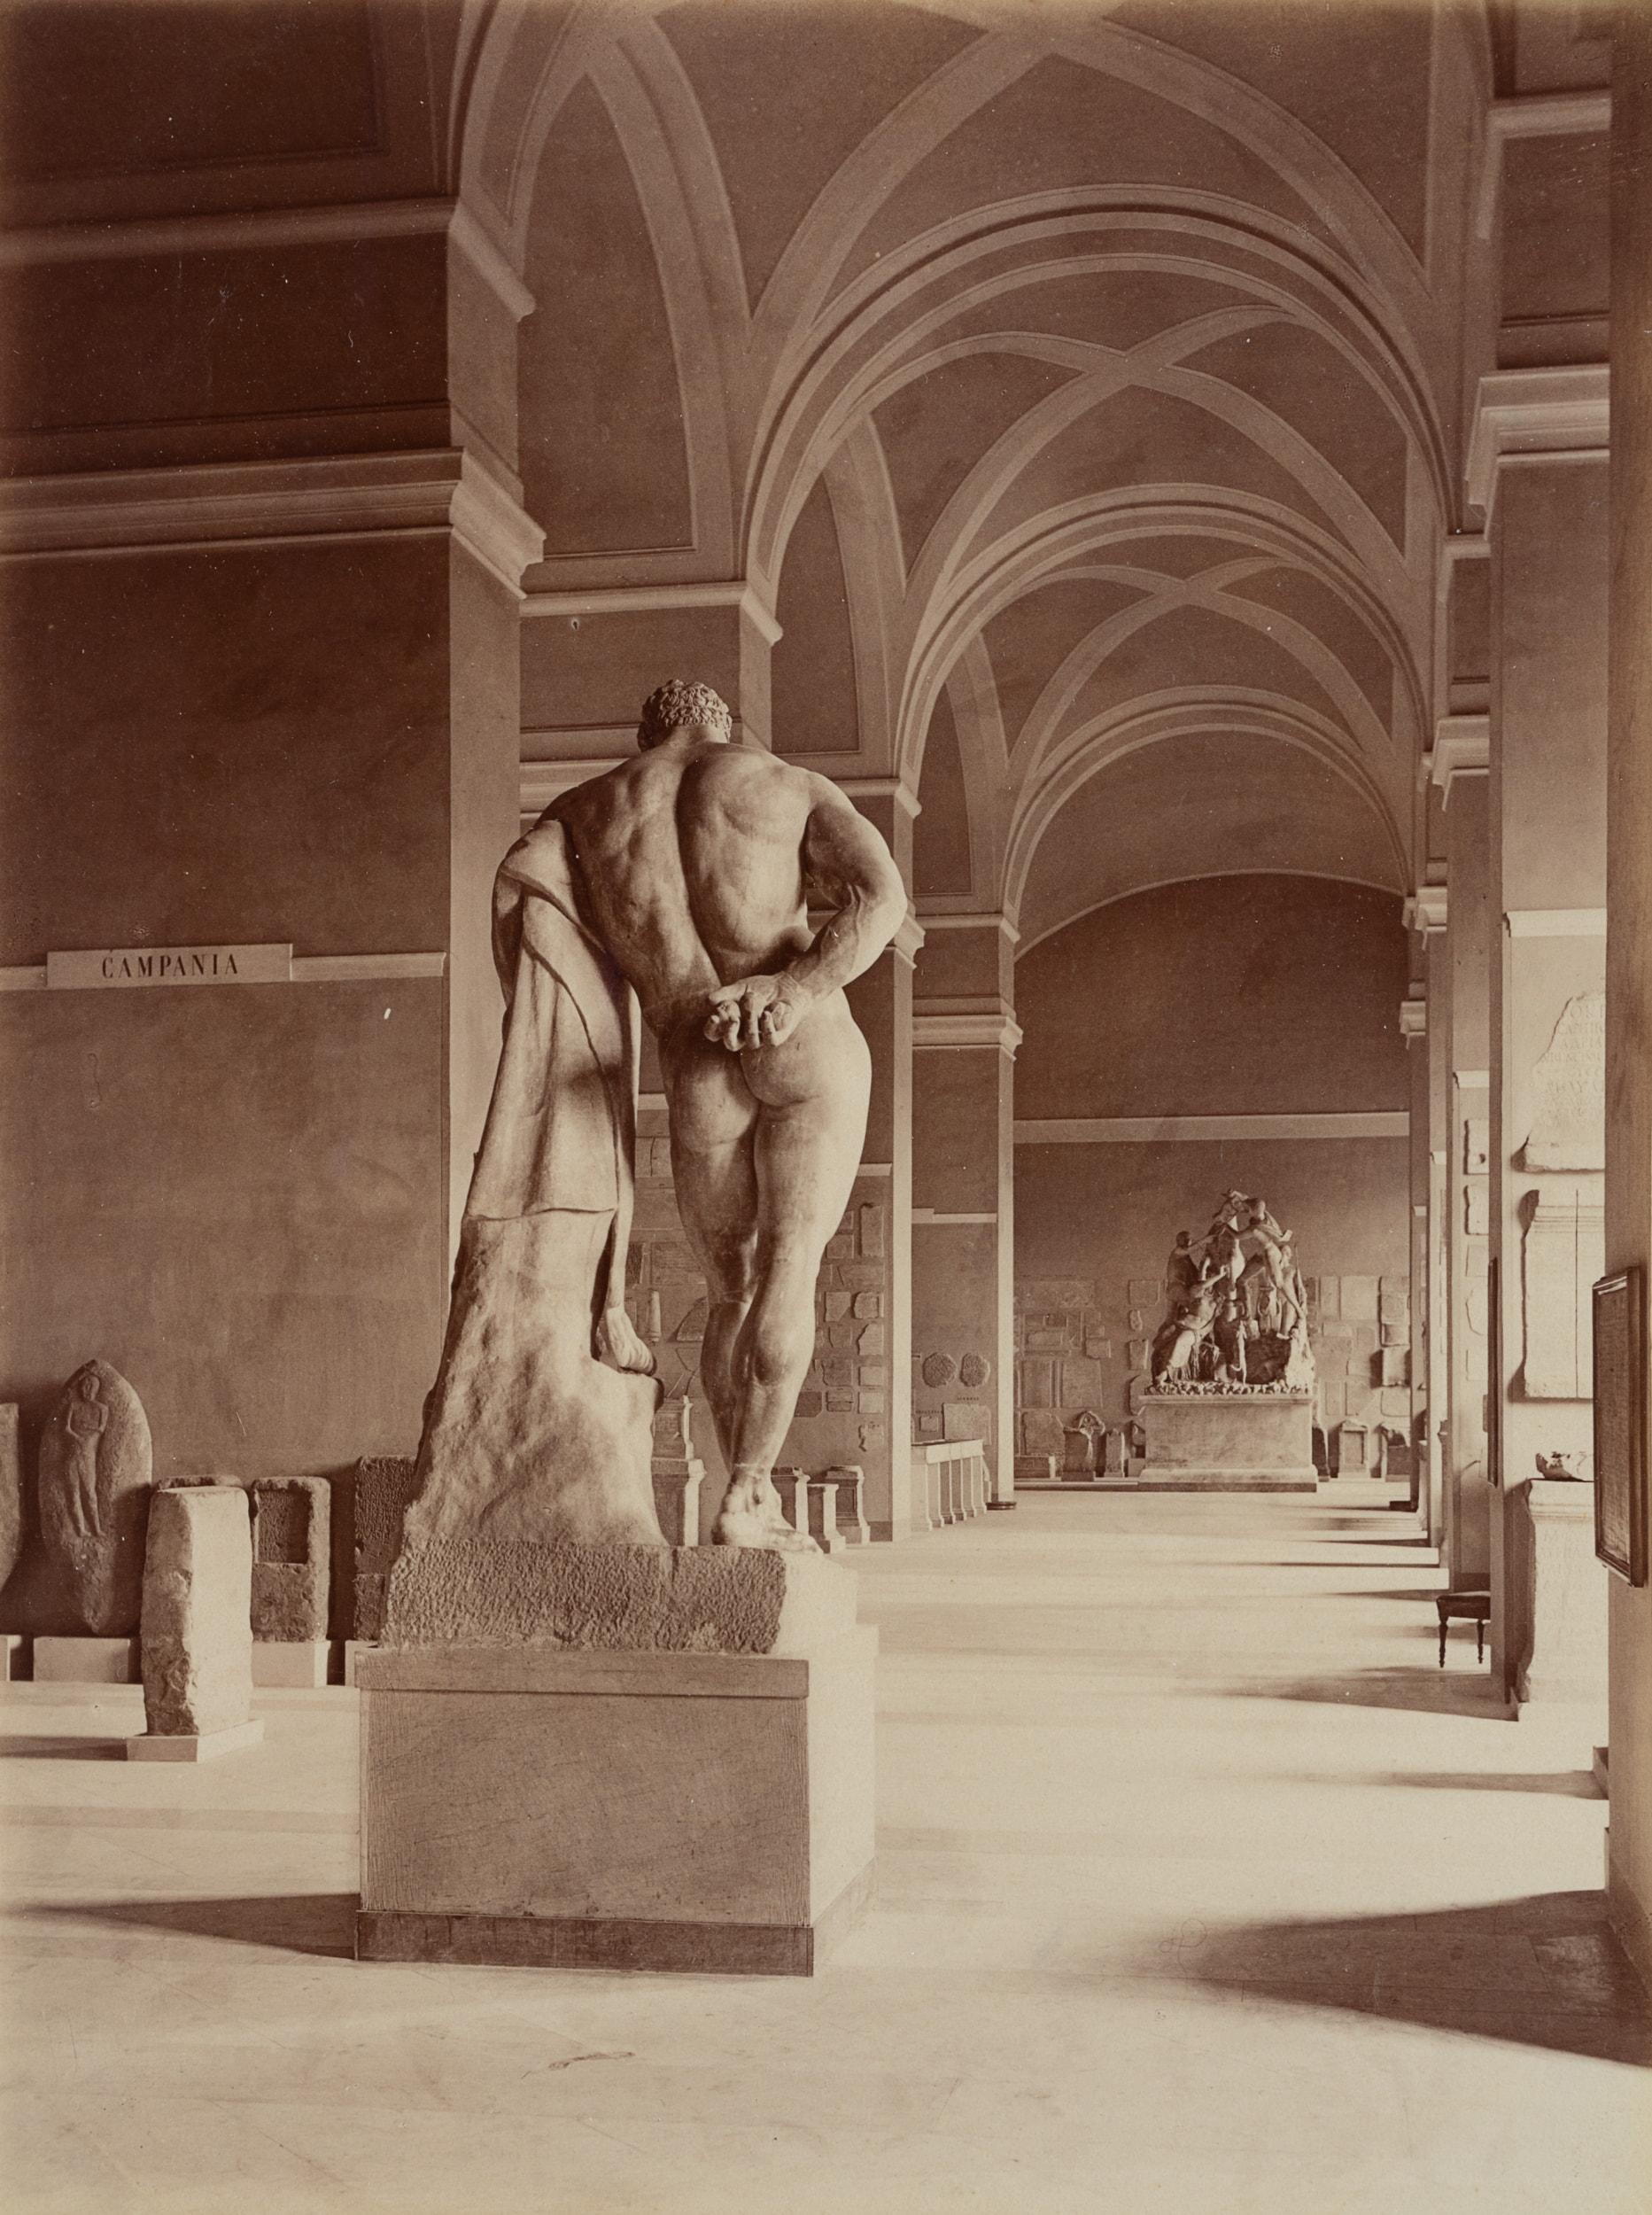 Fratelli Alinari Black and White Photograph – Herkules Farnese, Nationalmuseum, Neapel